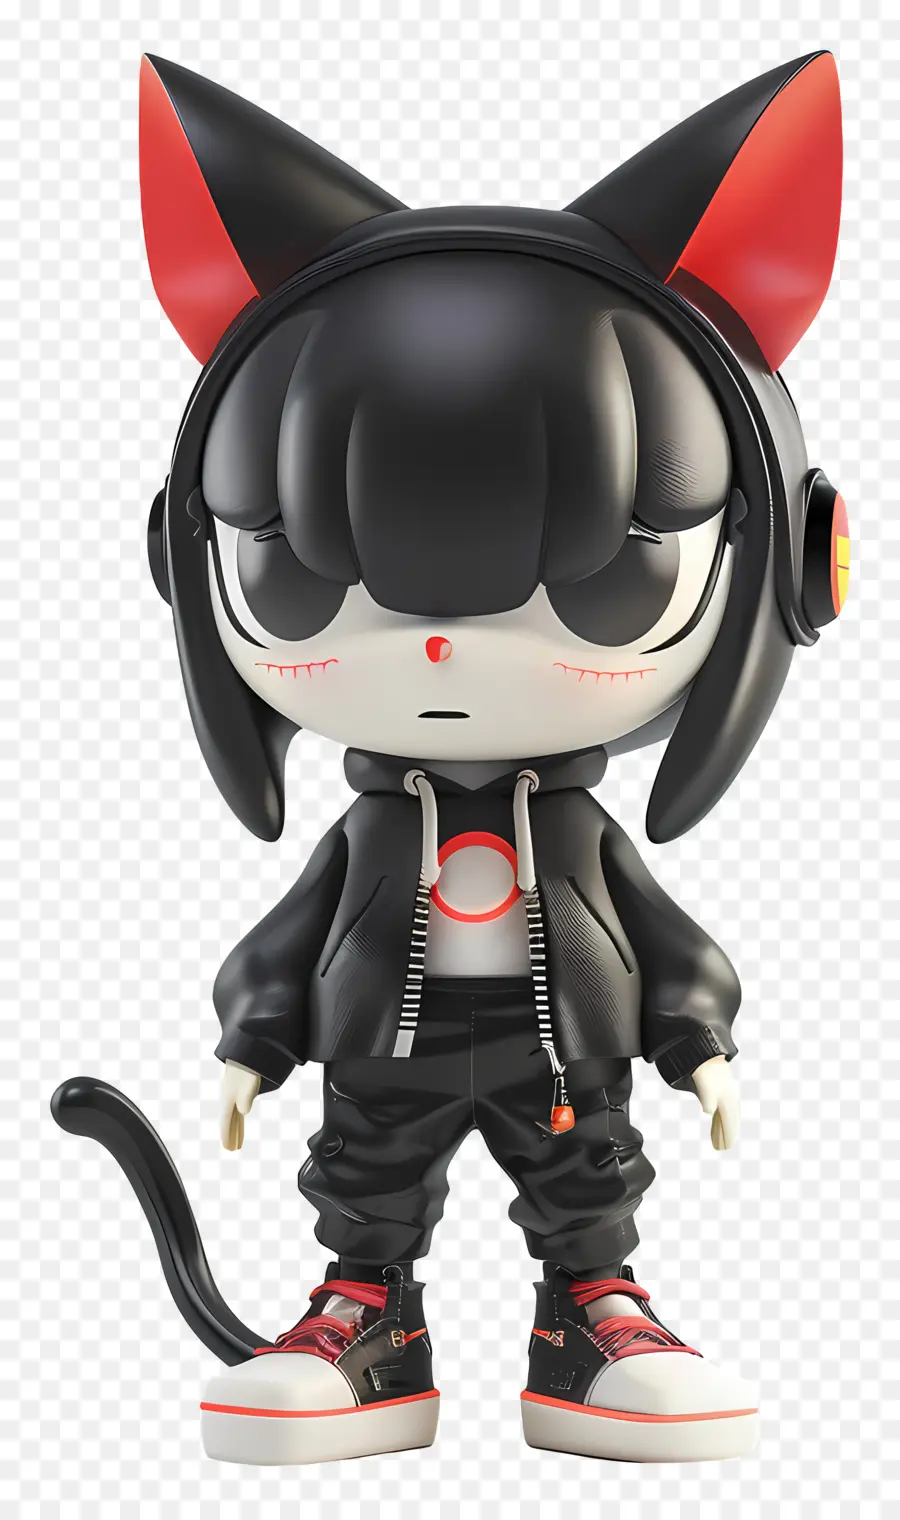 Kuromi schwarze Katze rote Augen Kopfhörer Hipster Katze - Schwarze Katze mit roten Augen tragen Kopfhörer